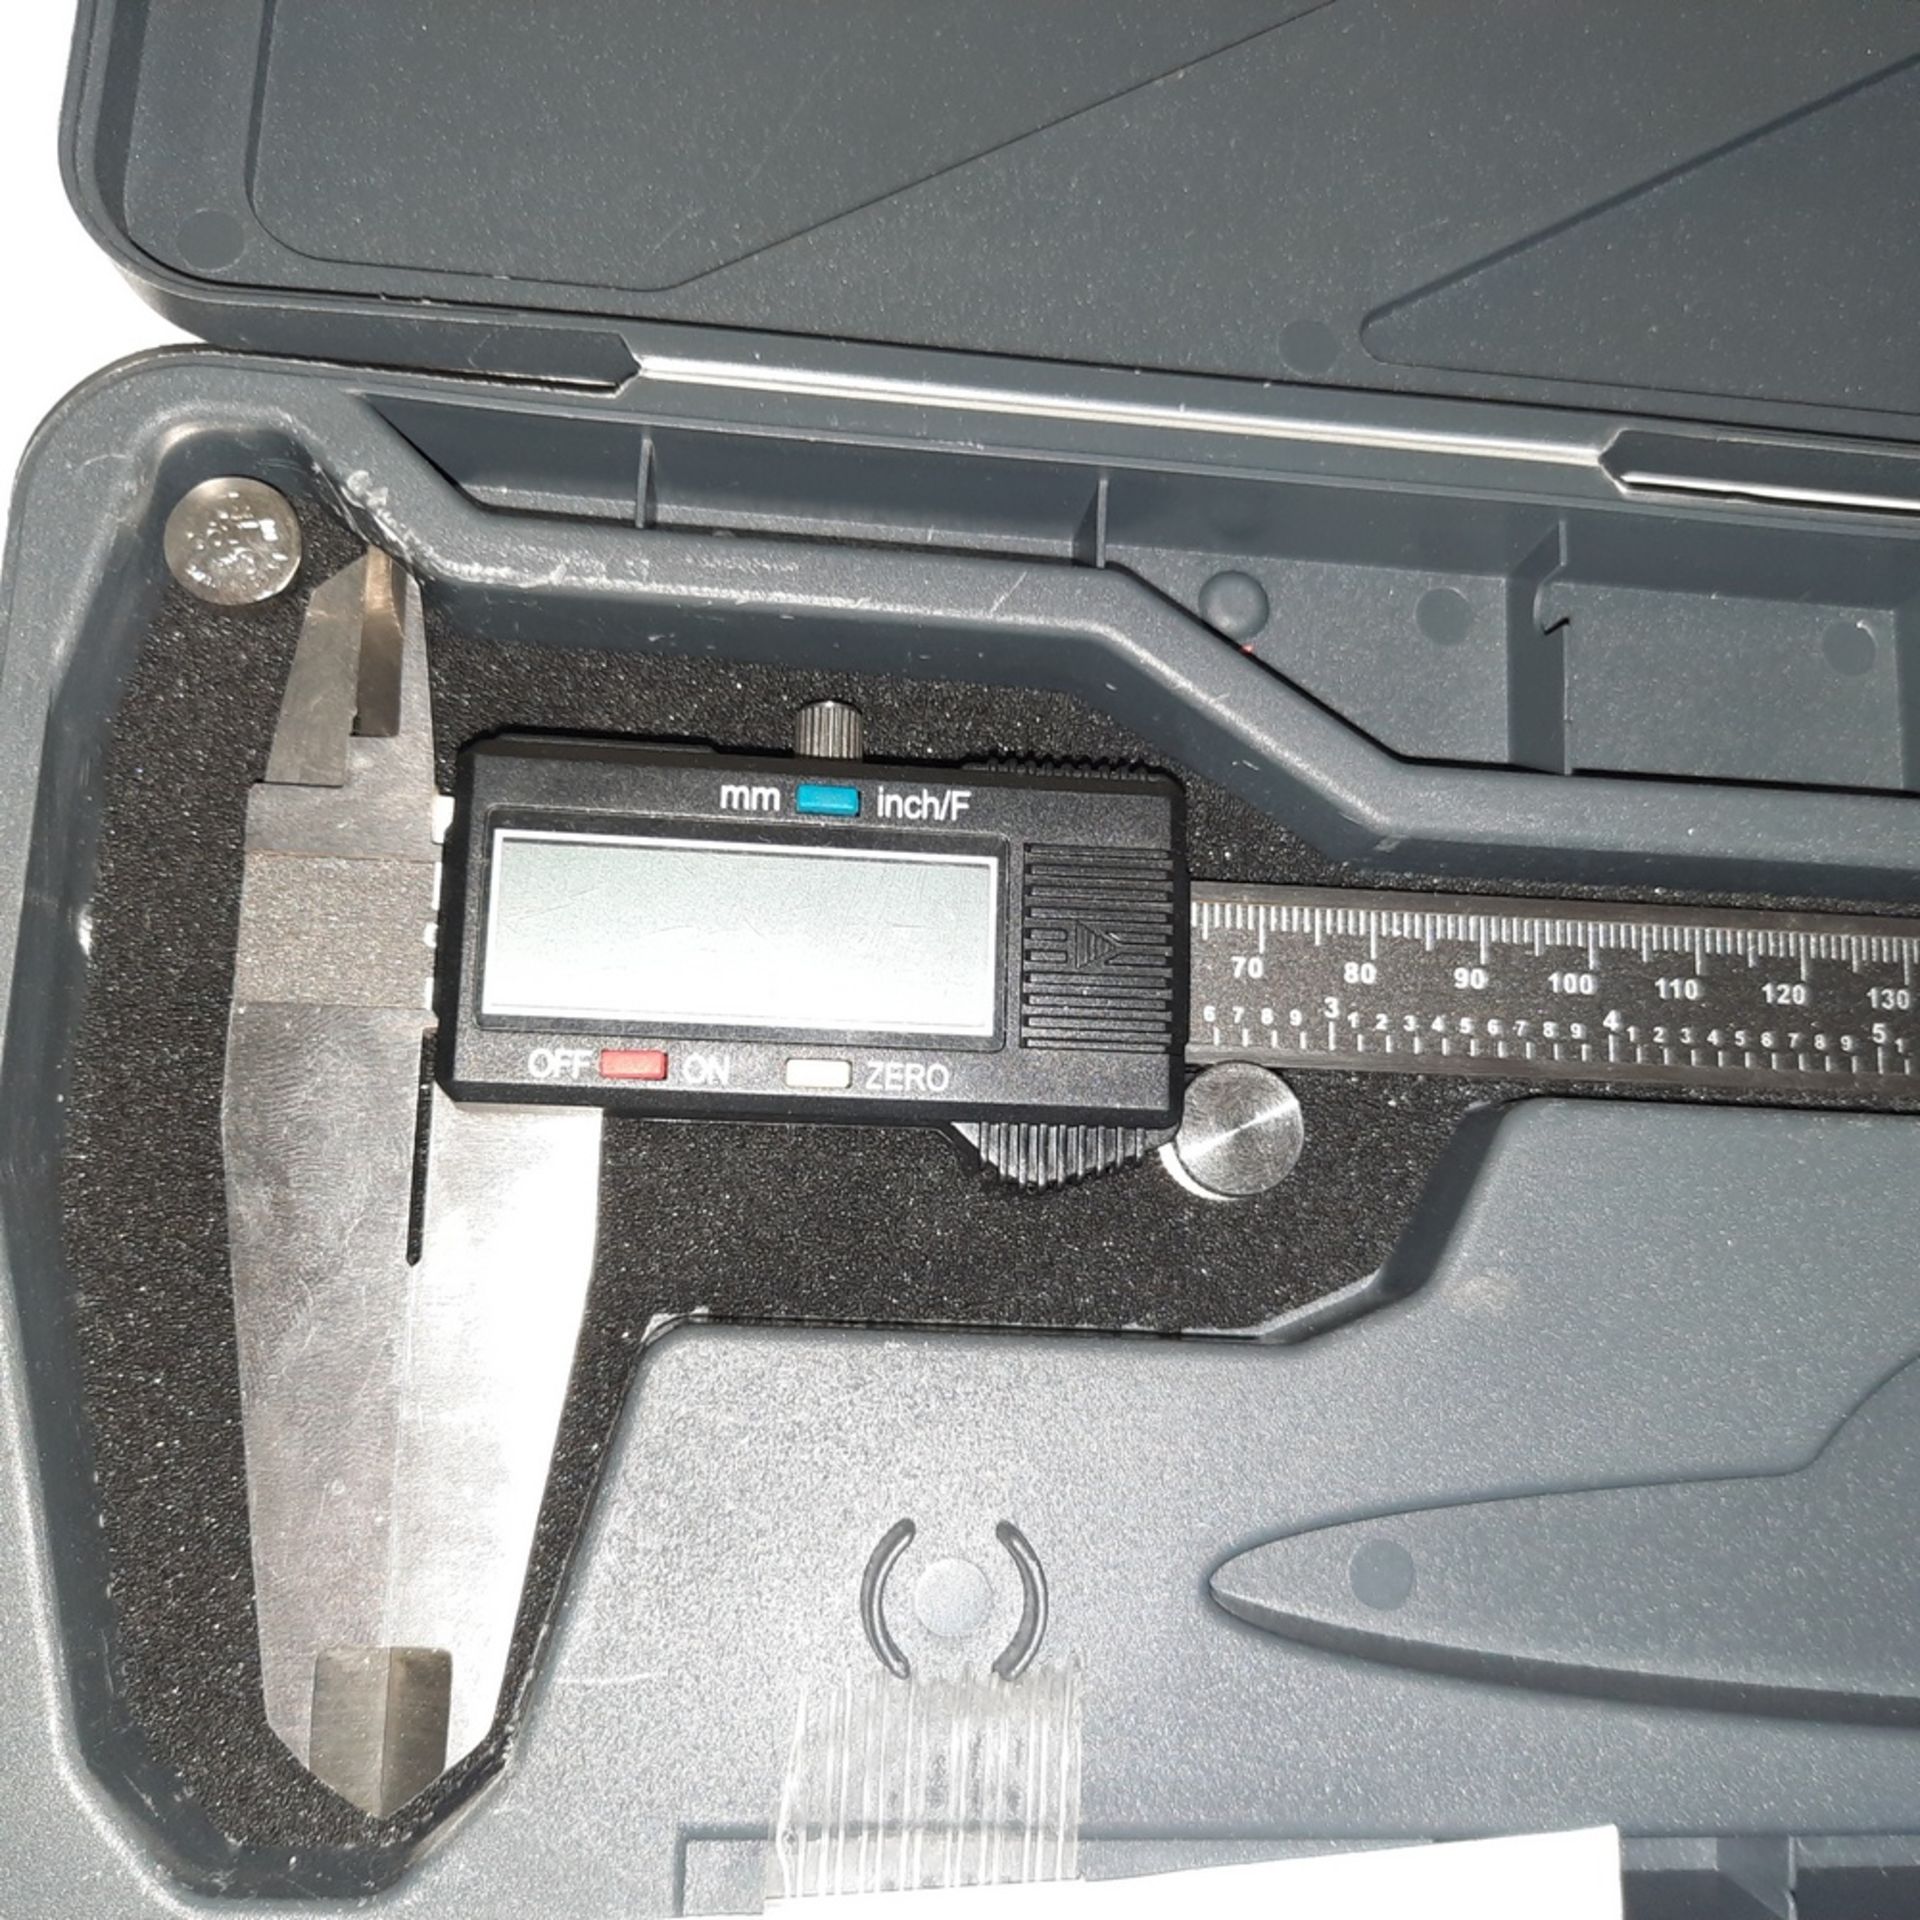 NEIKO Digital Micrometer, c/w Case - Image 3 of 3